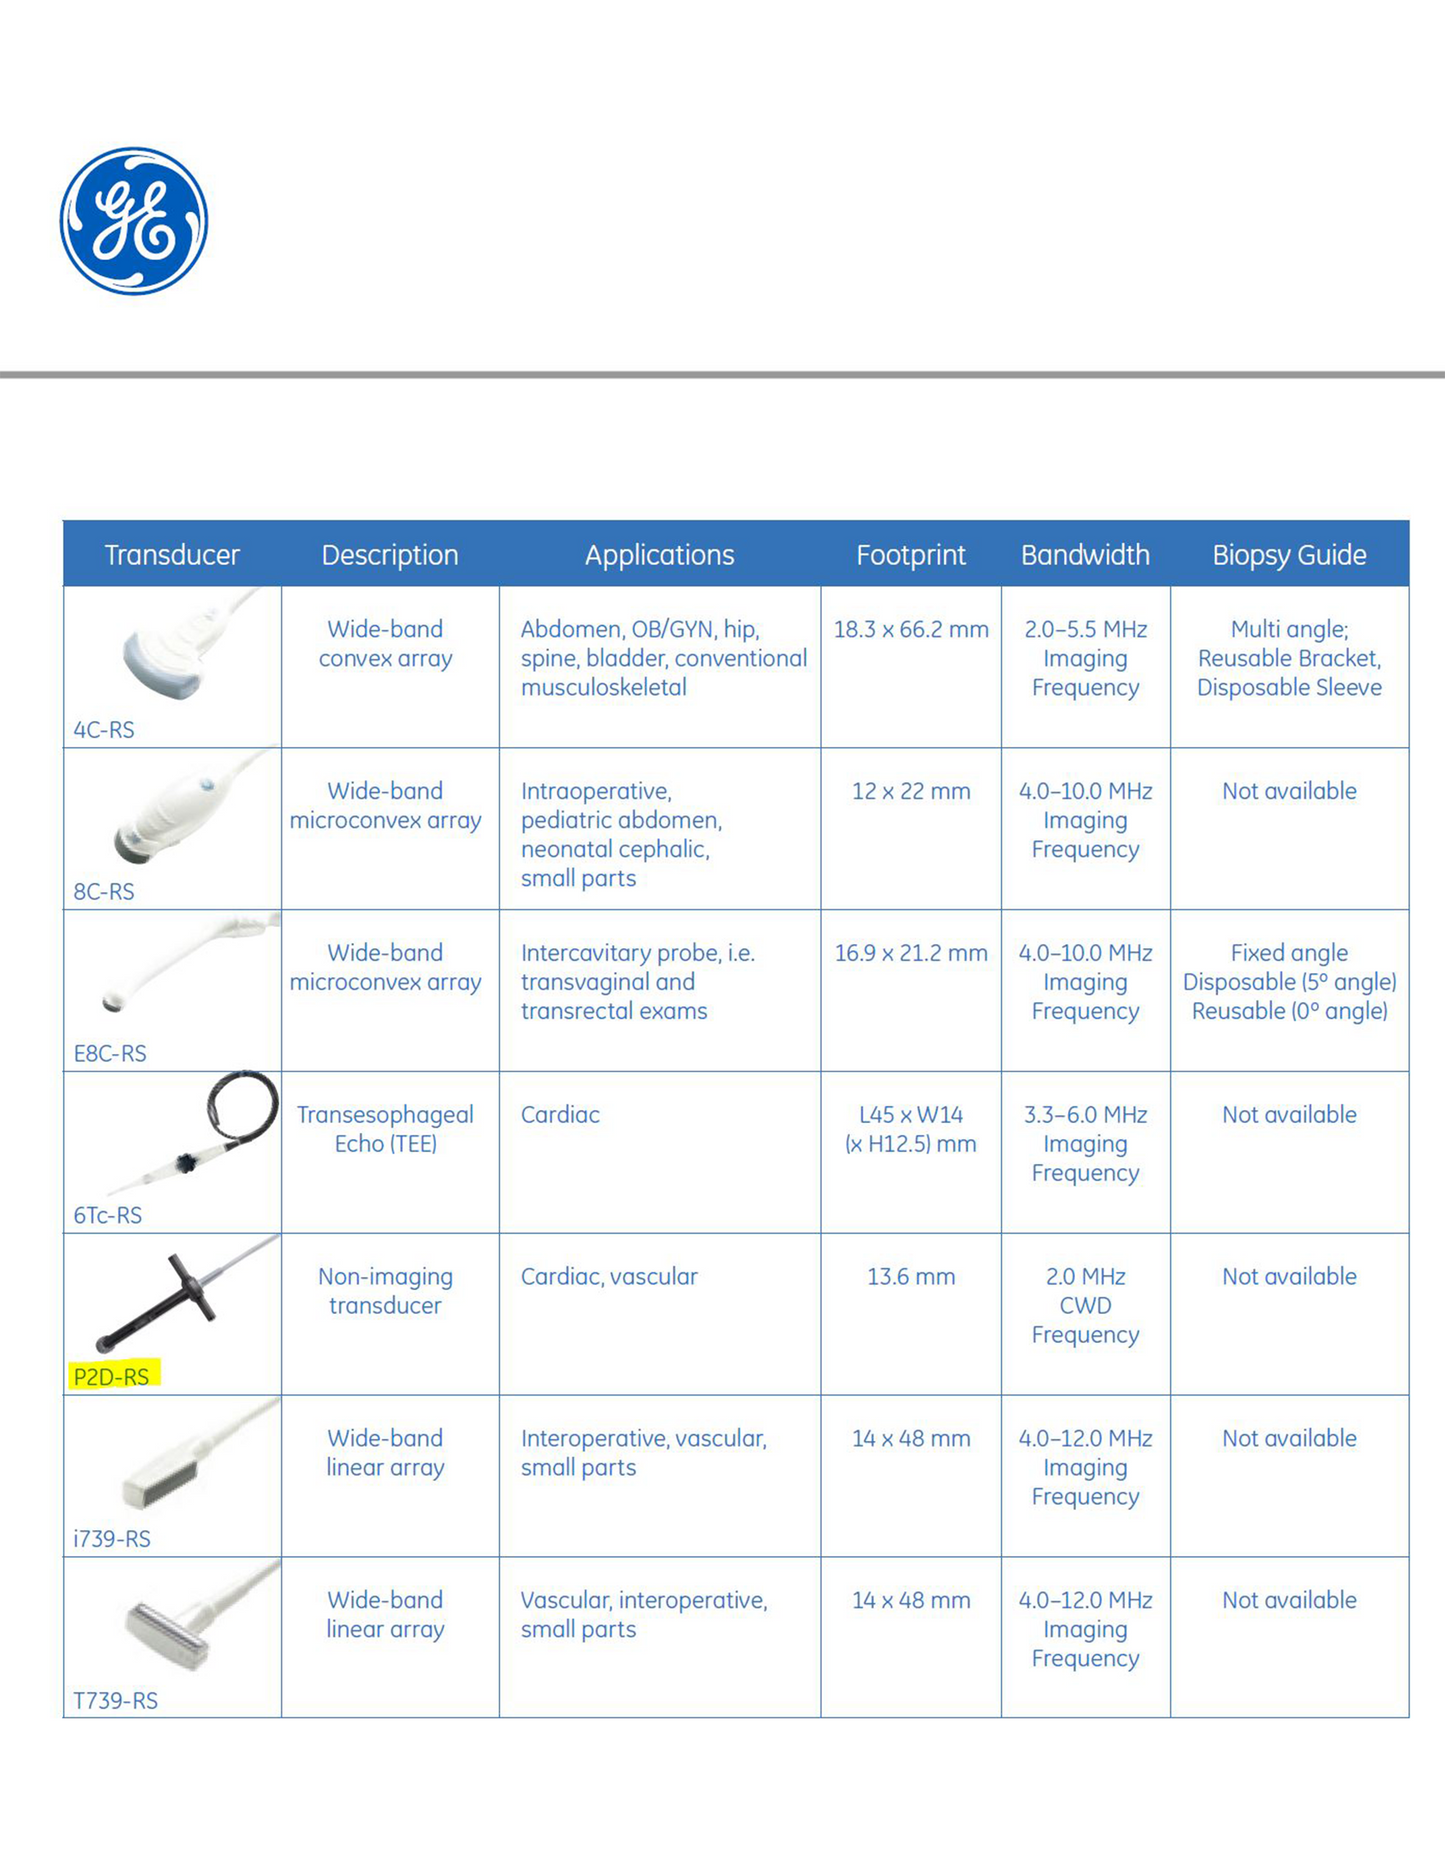 GE P2D-RS Pencil Doppler Ultrasound Probe/Transducer